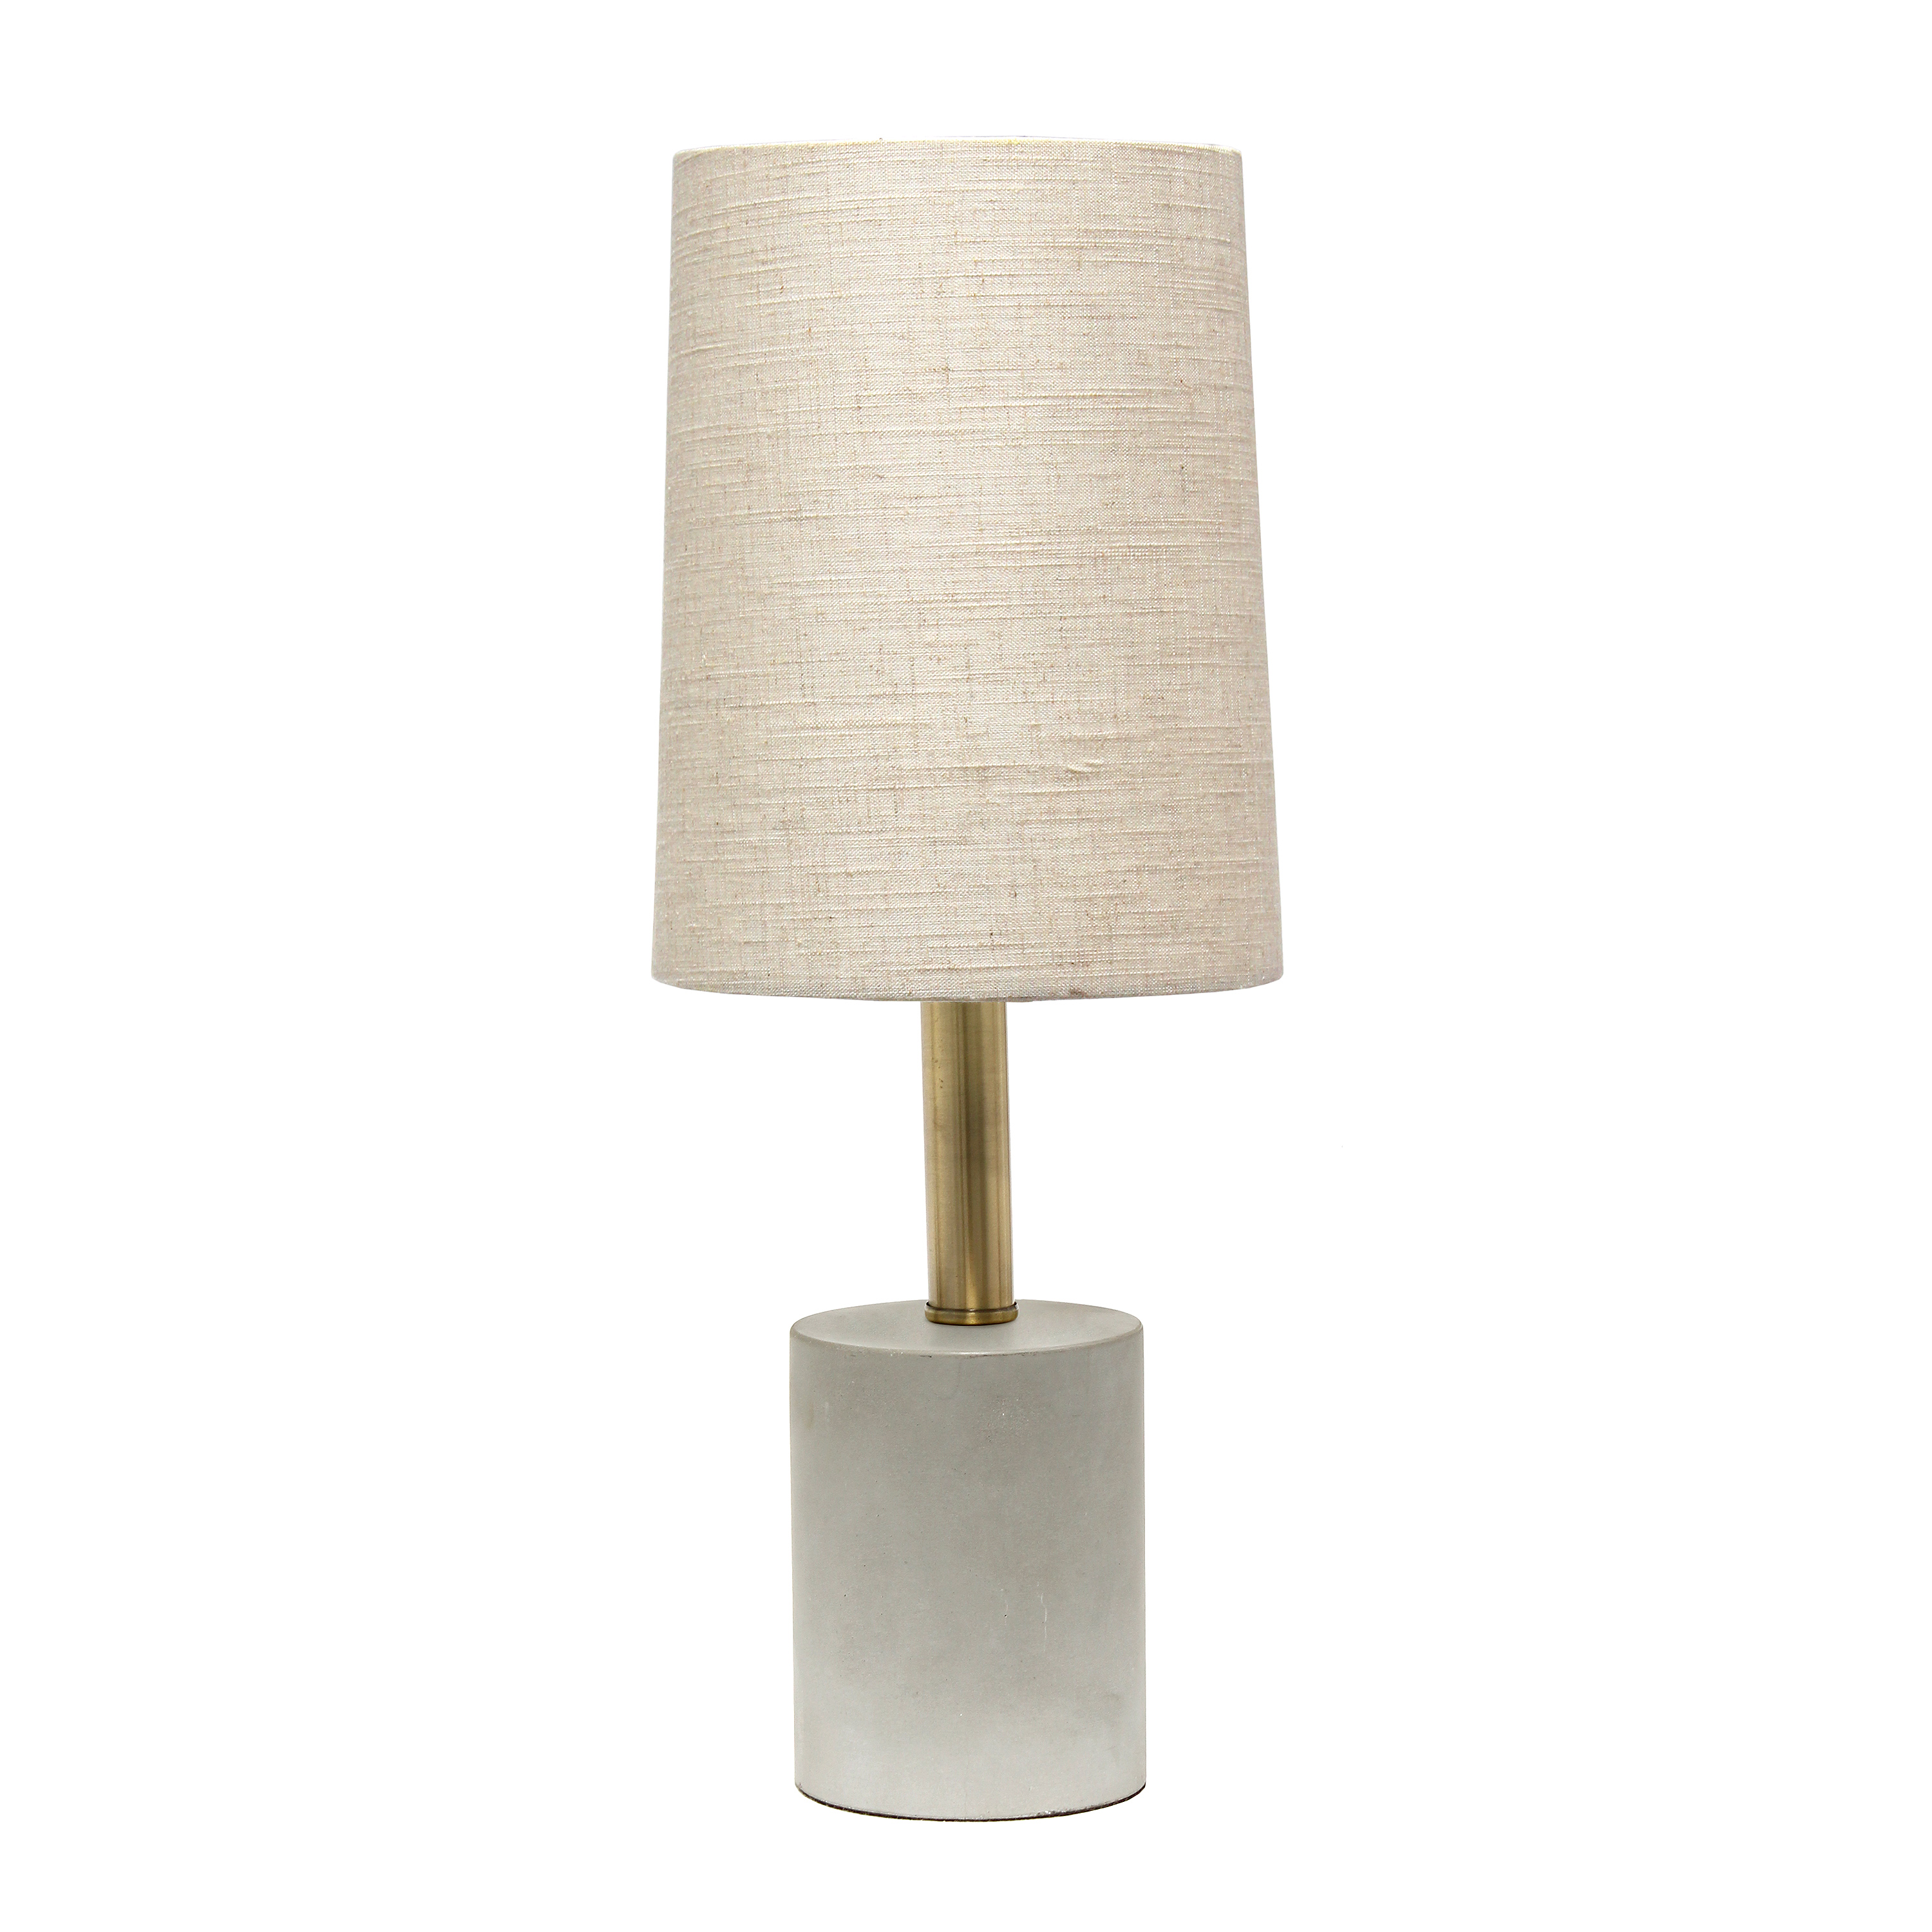  Lalia Home Antique Brass Concrete Table Lamp with Linen Shade, Khaki